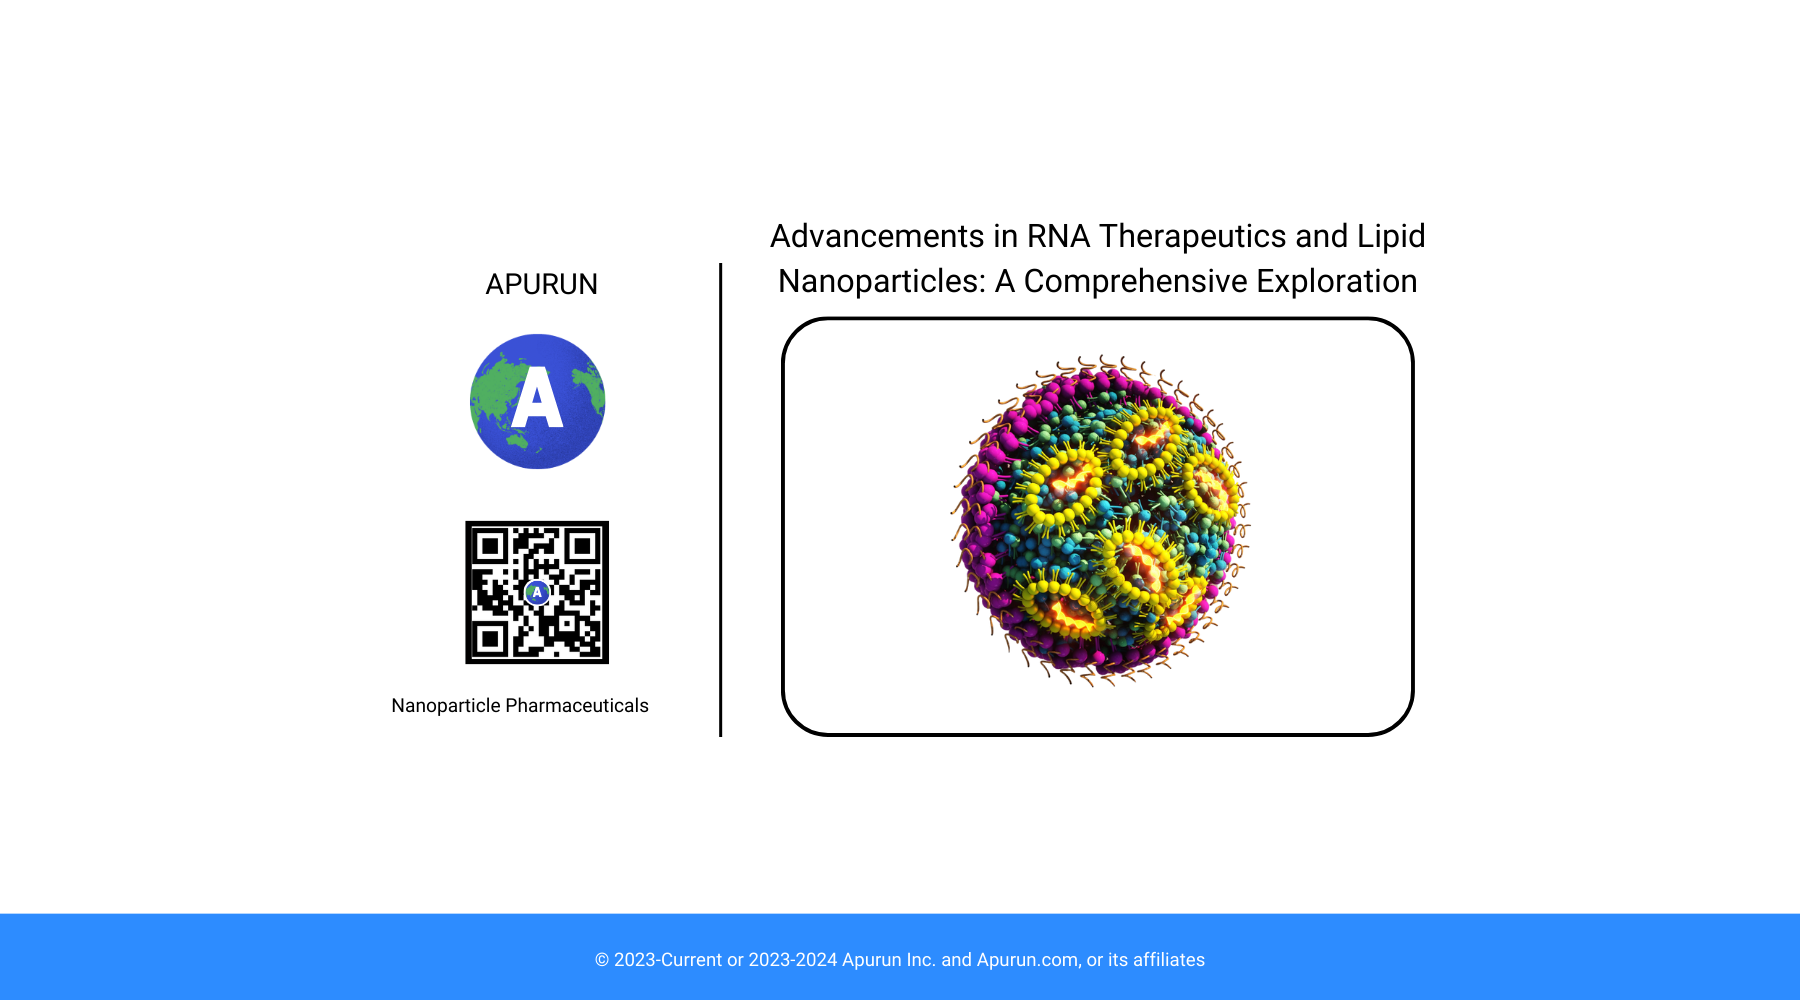 Advancements in RNA Therapeutics and Lipid Nanoparticles: A Comprehensive Exploration